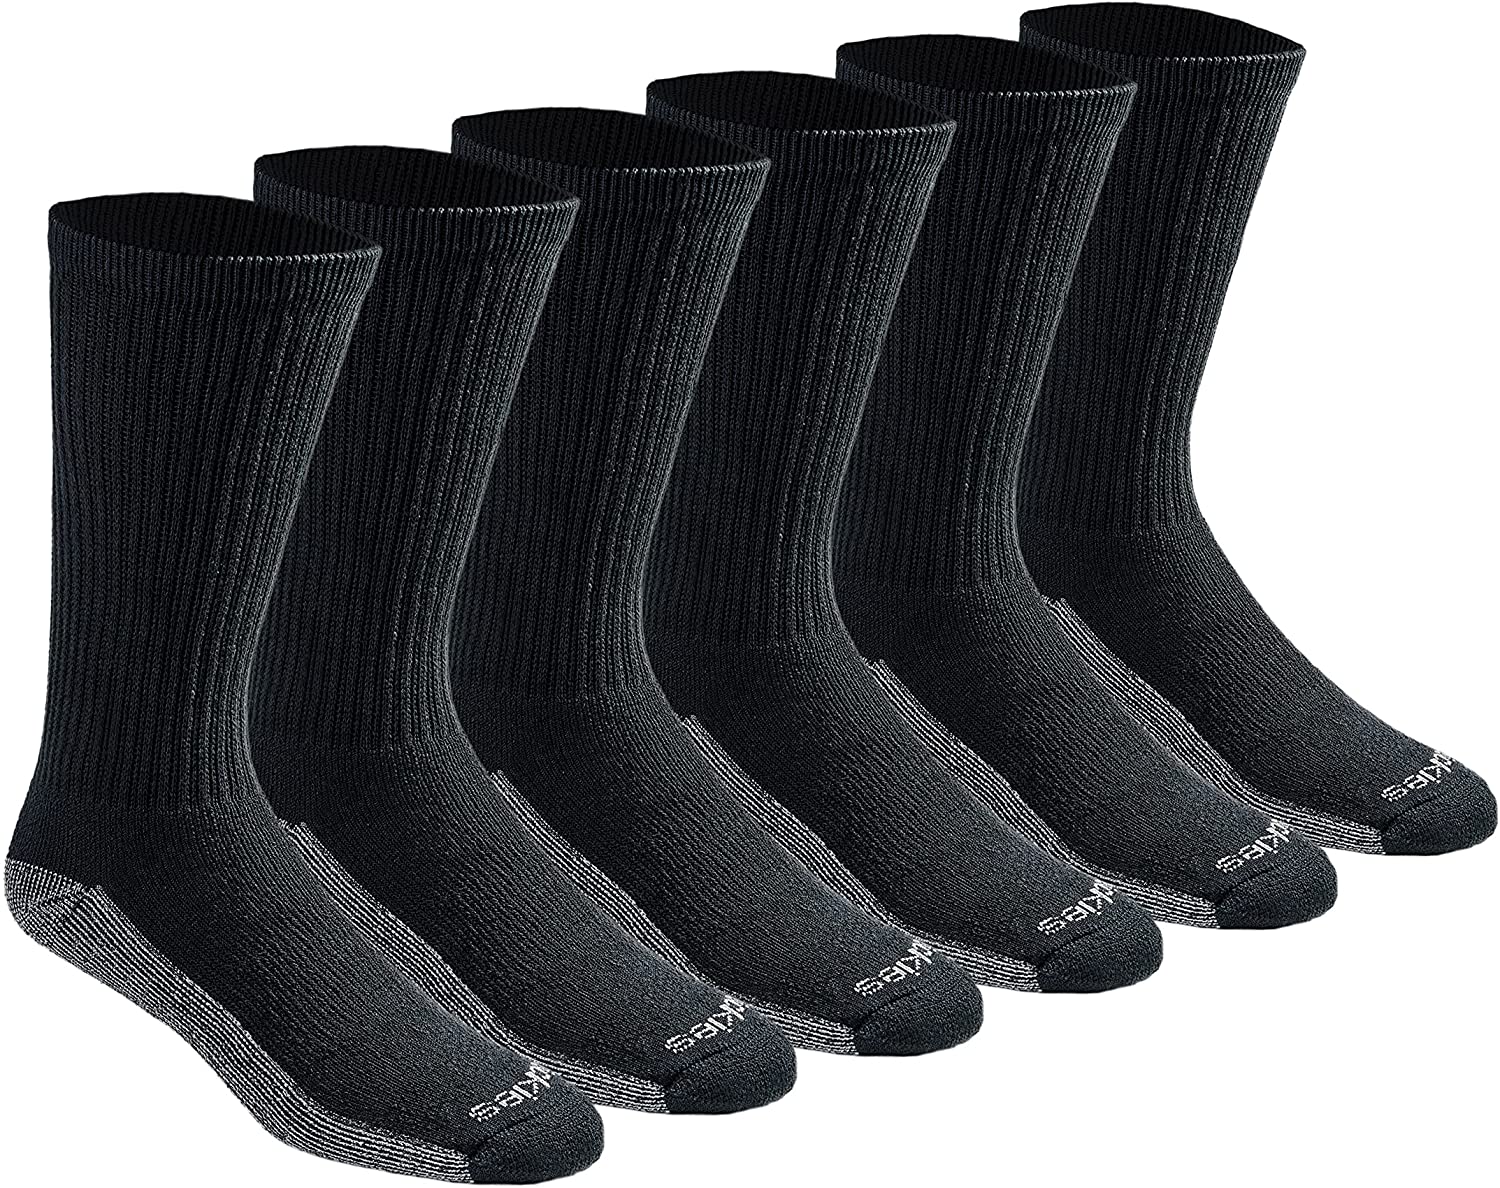 Dickies Men's Dri-tech Moisture Control Crew Socks 